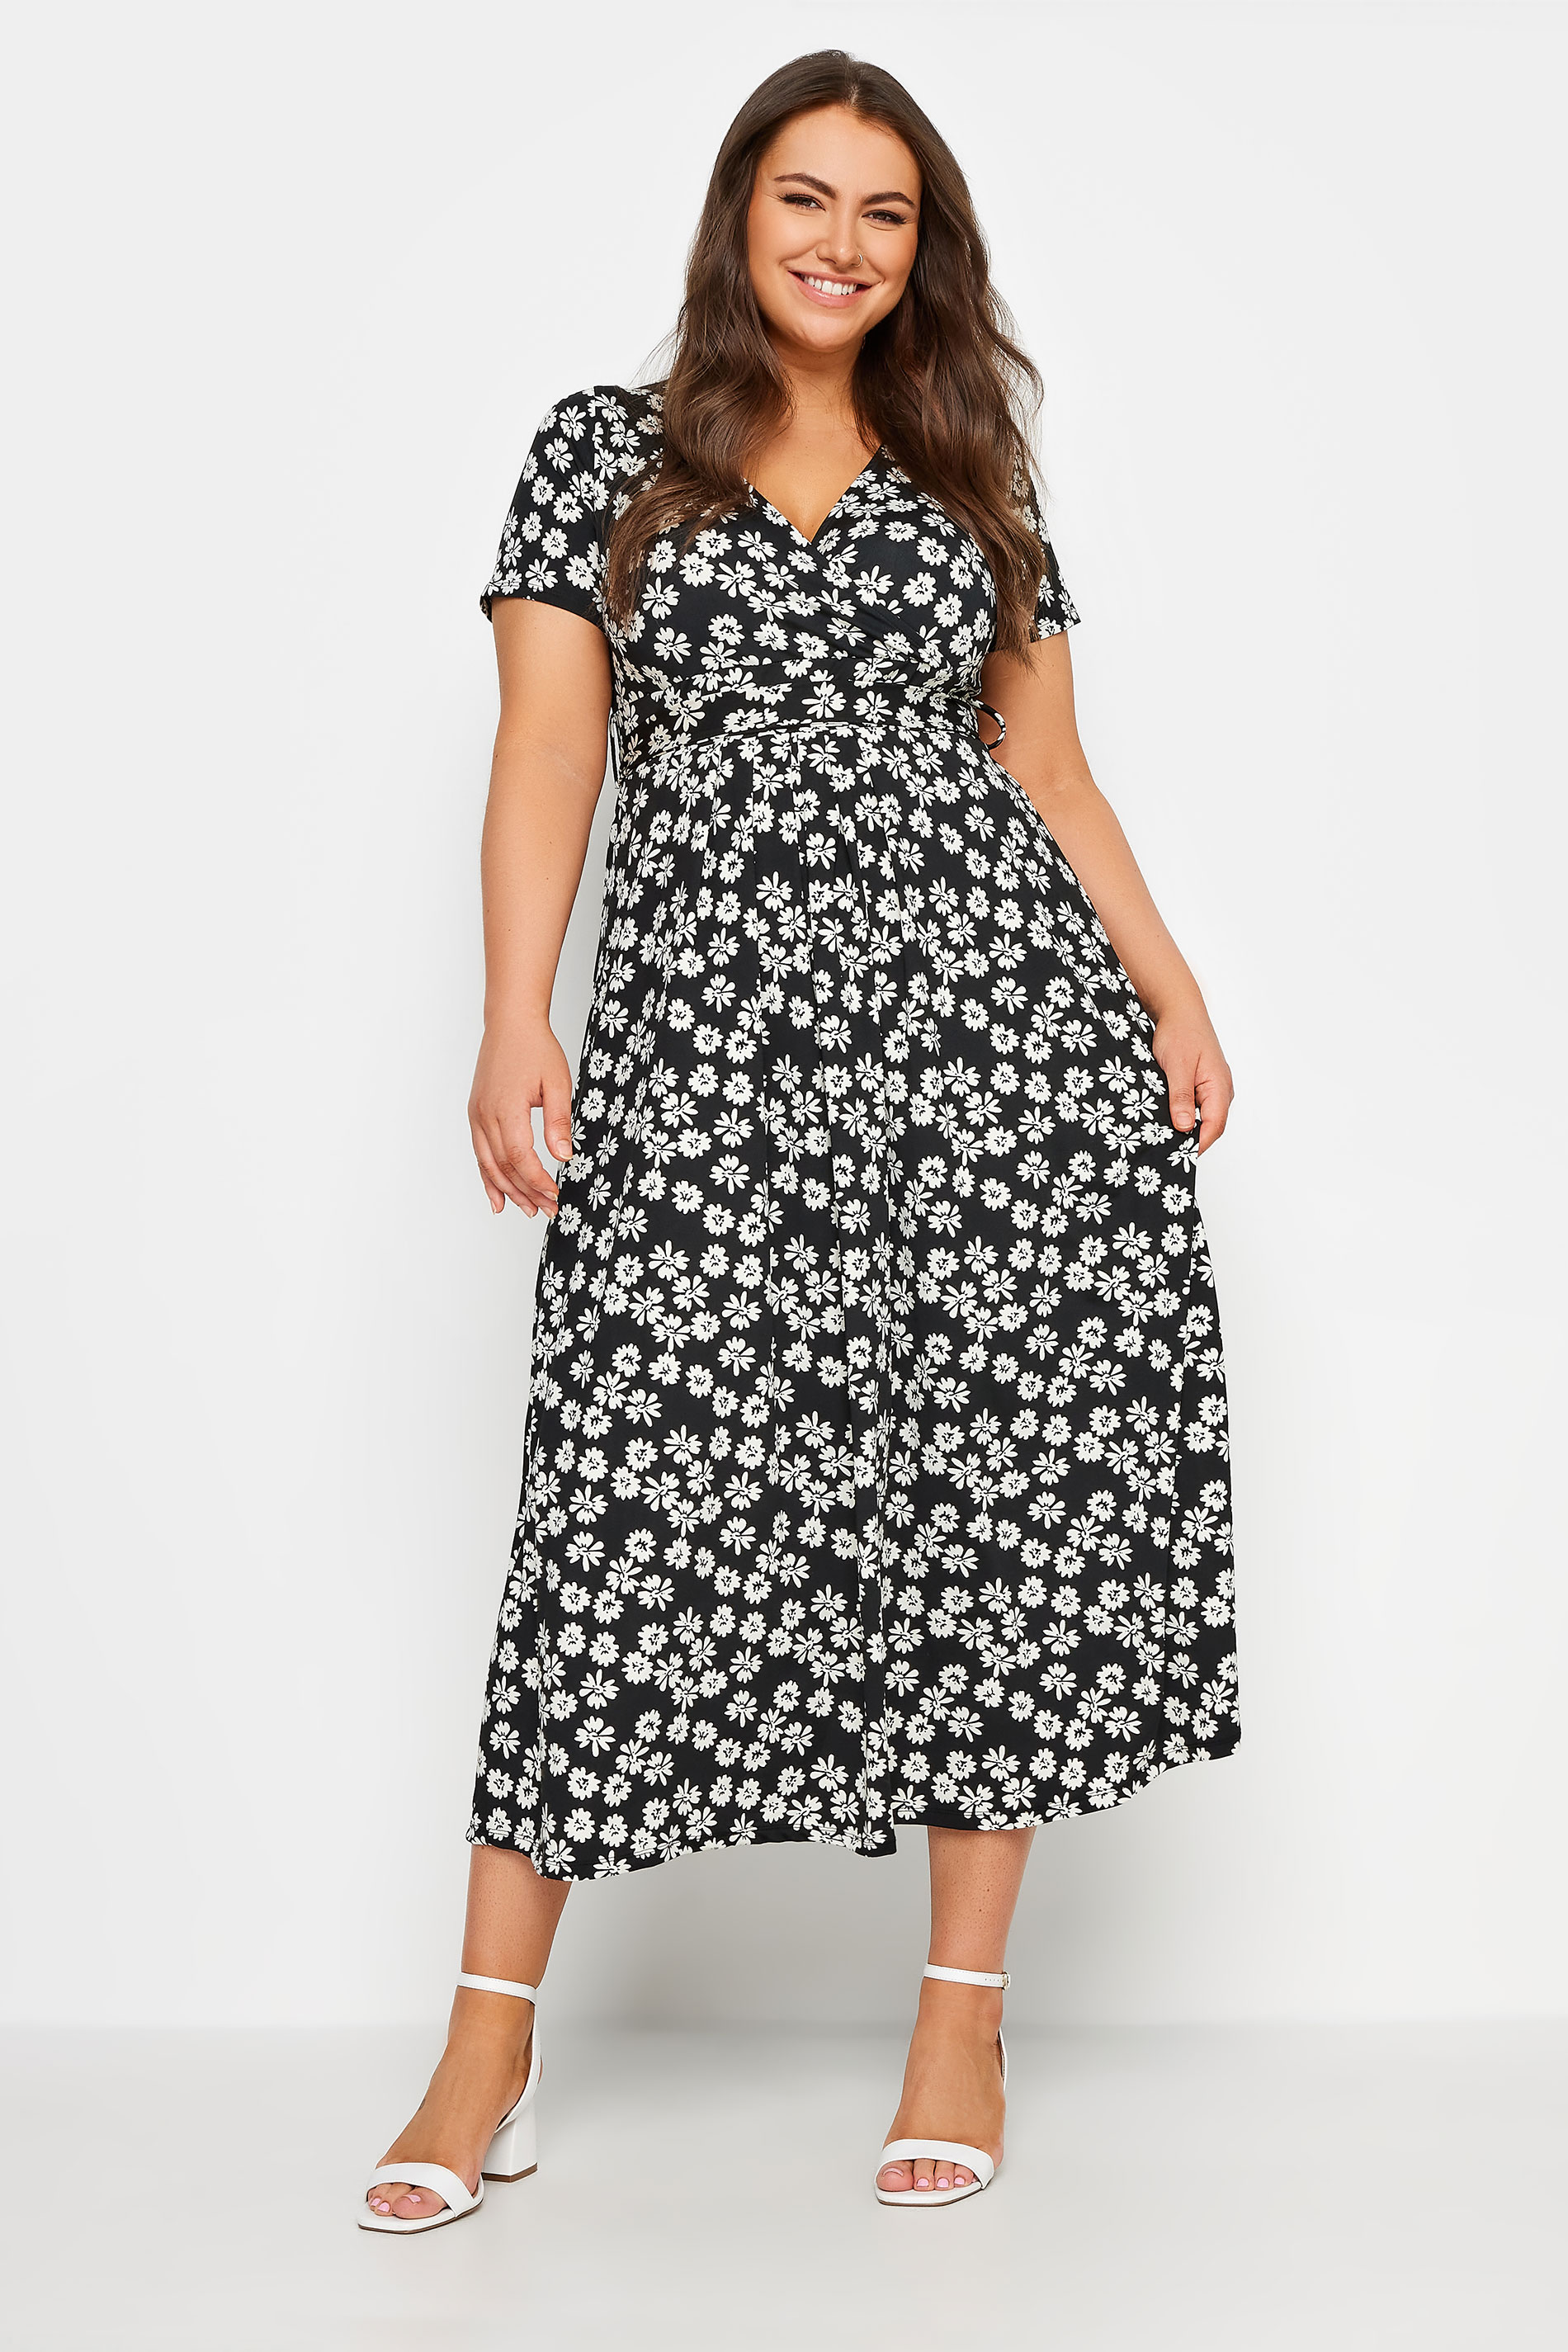 YOURS Plus Size Black Floral Print Tie Waist Maxi Dress | Yours Clothing 2